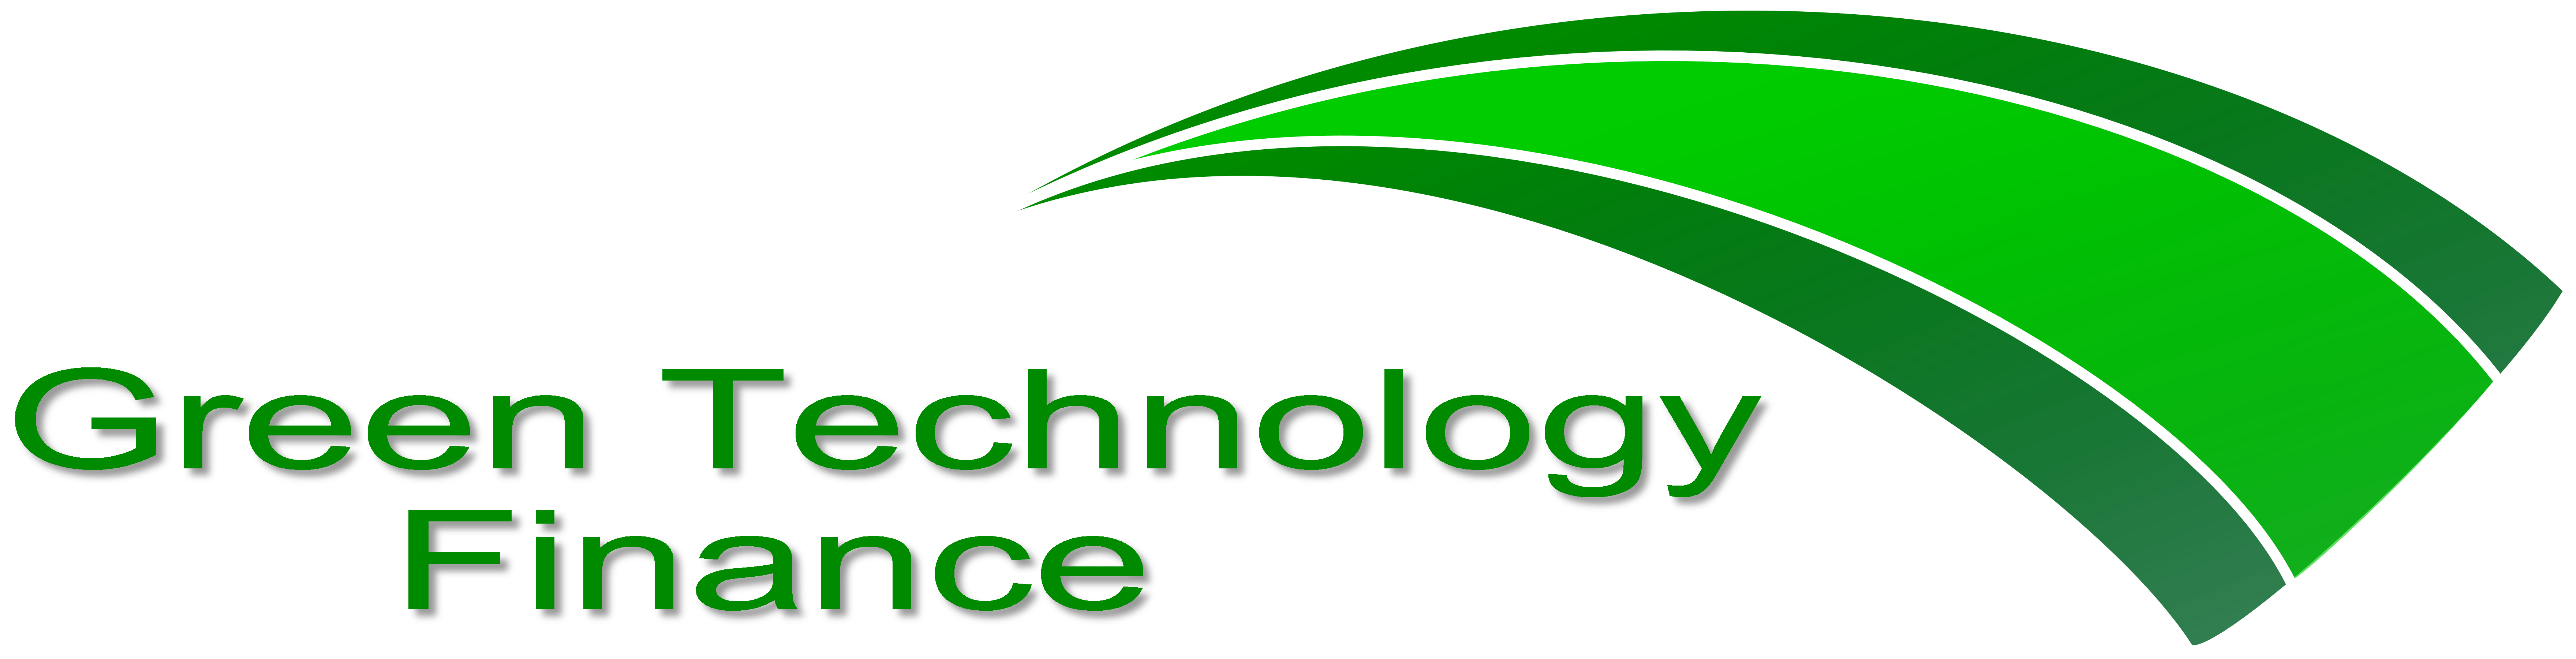 Green Technology Logo - About Us Technology Finance